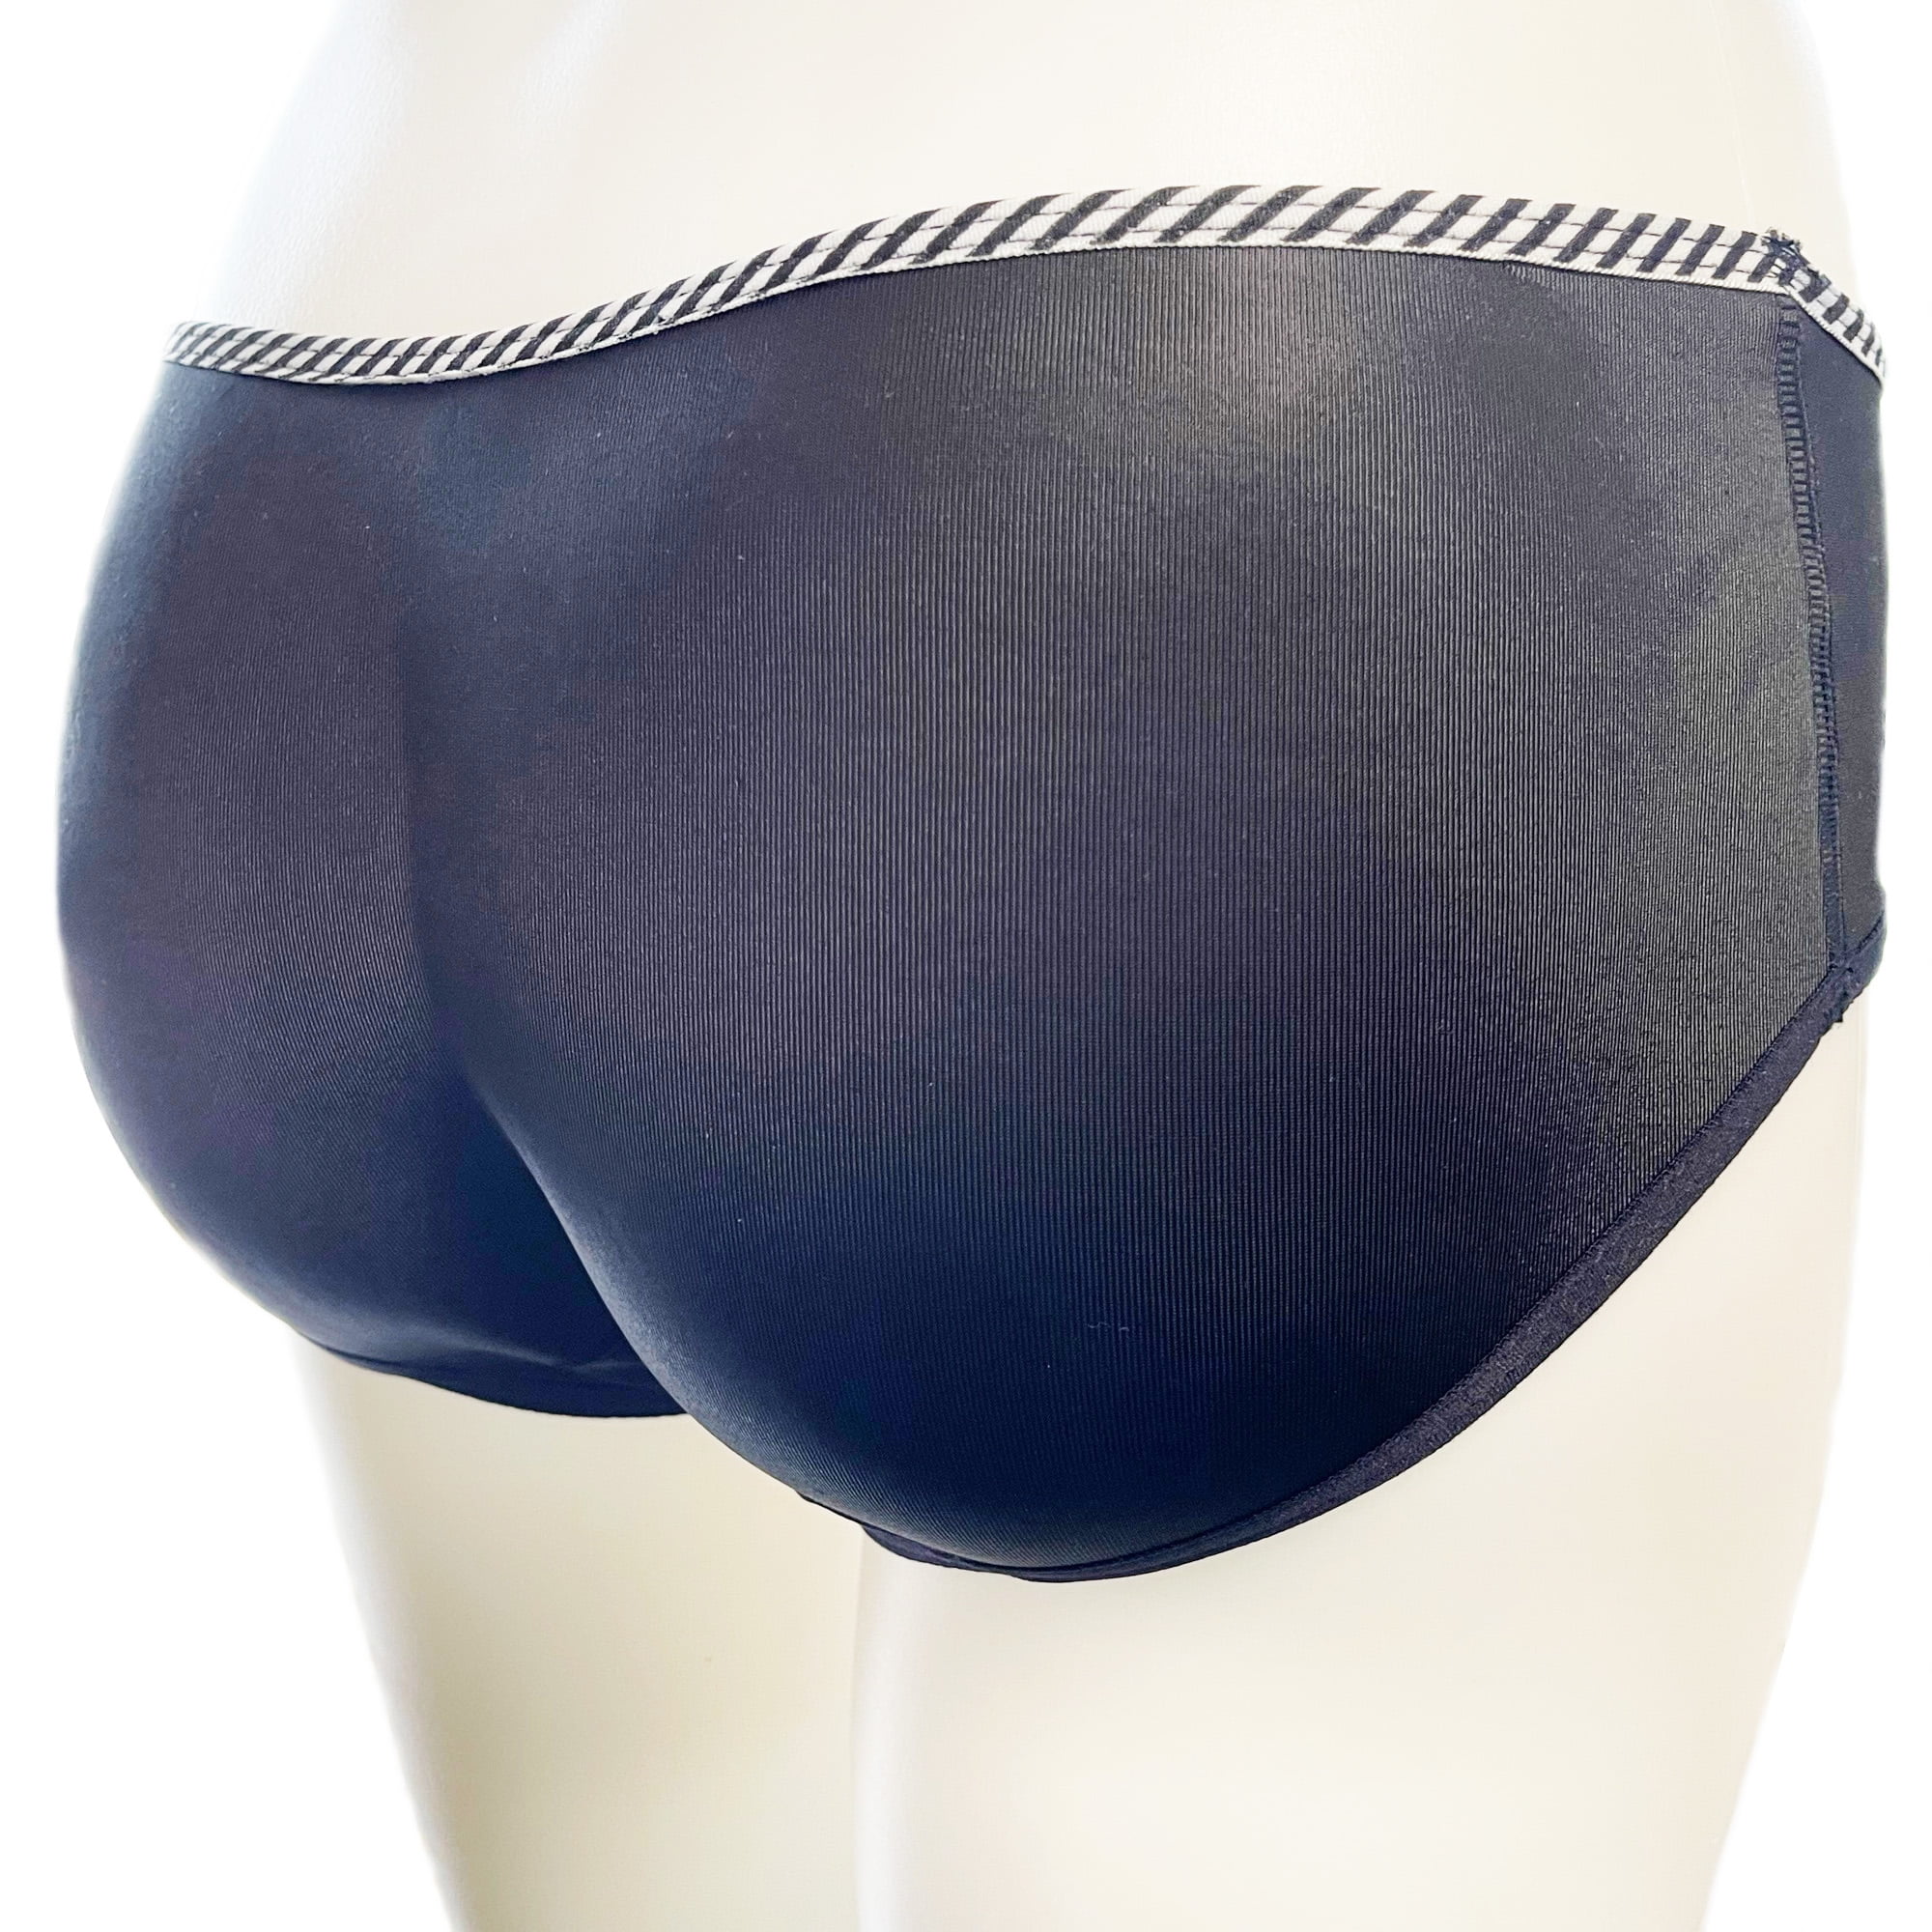 Low Rise Butt Padded Underwear Brief Booty Enhancer Shaper P